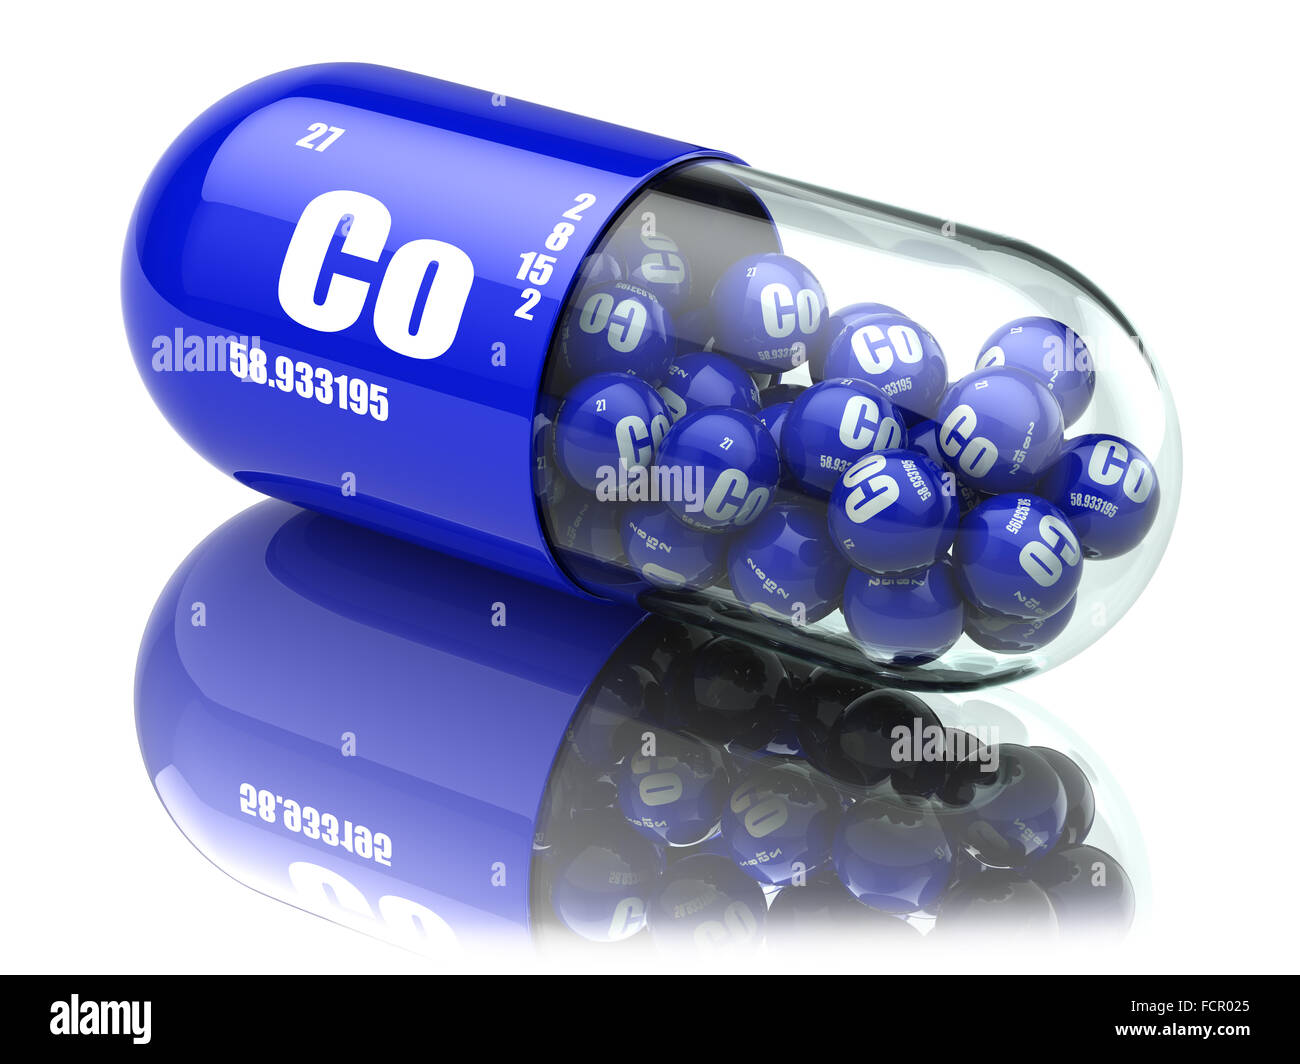 cobalt element